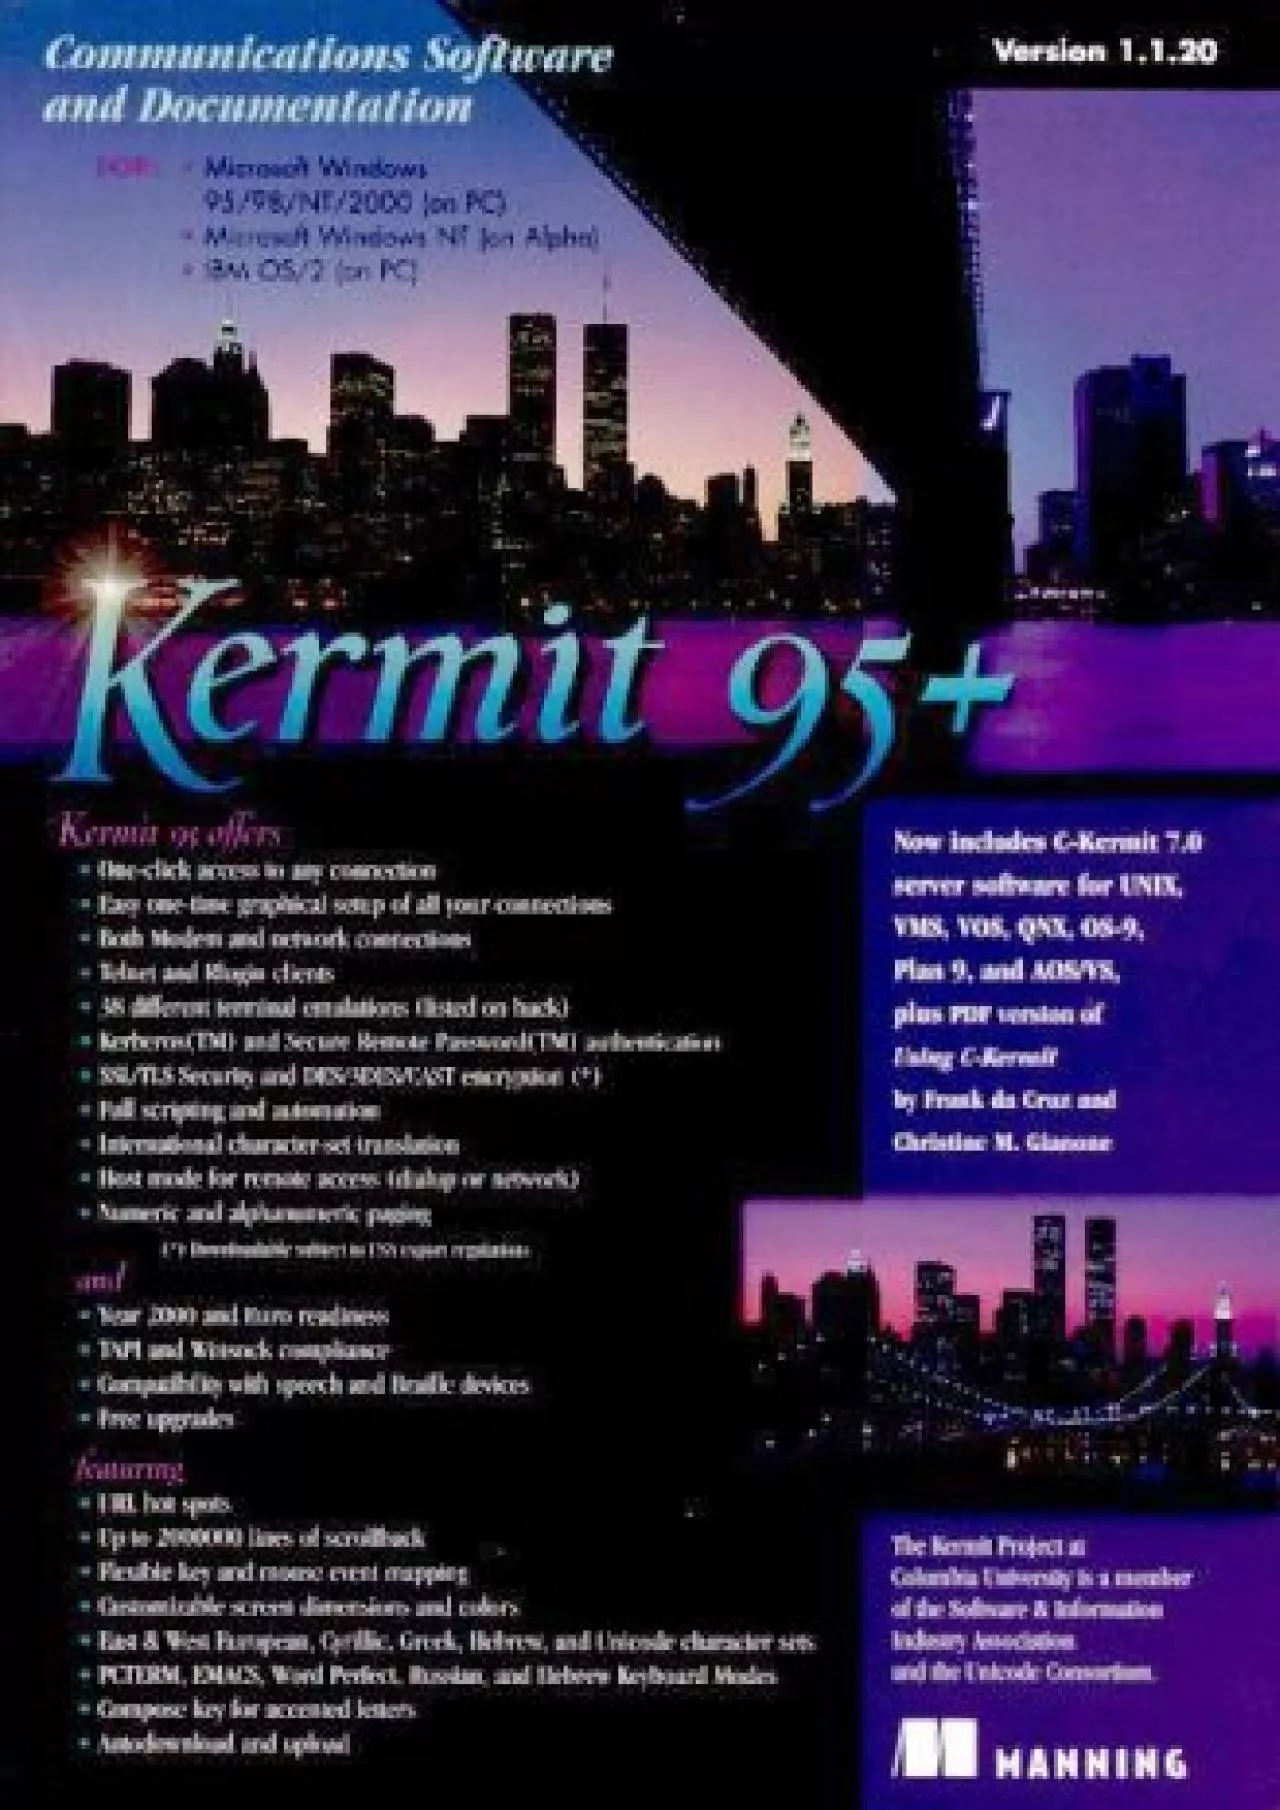 [eBOOK]-Kermit 95+: Communications Software for Windows 95/98/NT/2000/XP/Vista, Windows